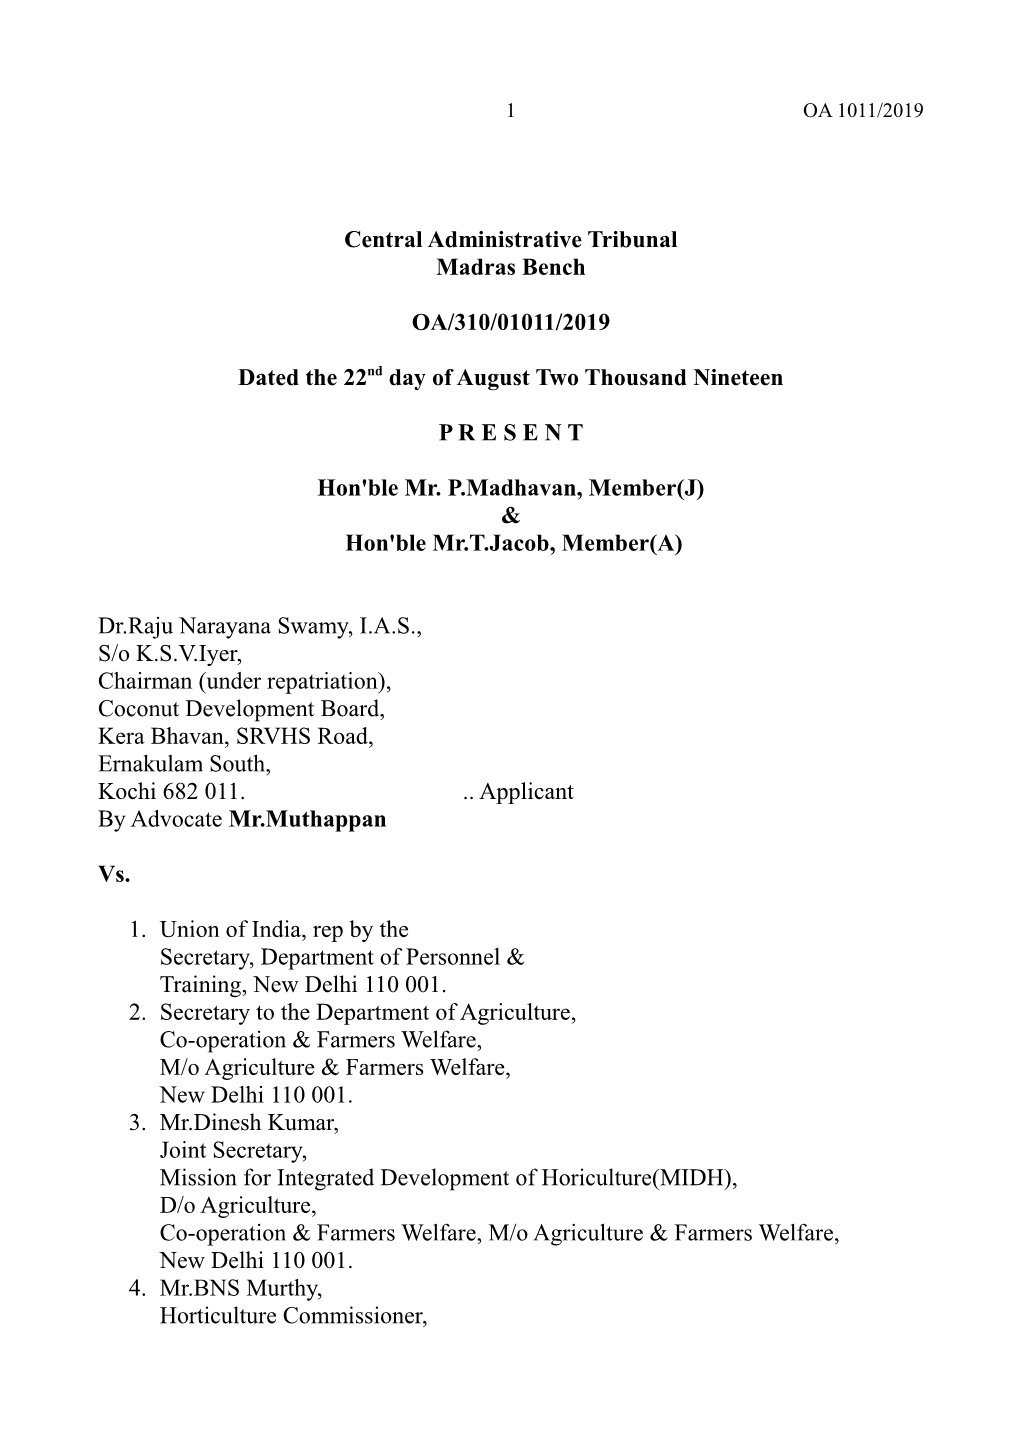 Central Administrative Tribunal Madras Bench OA/310/01011/2019